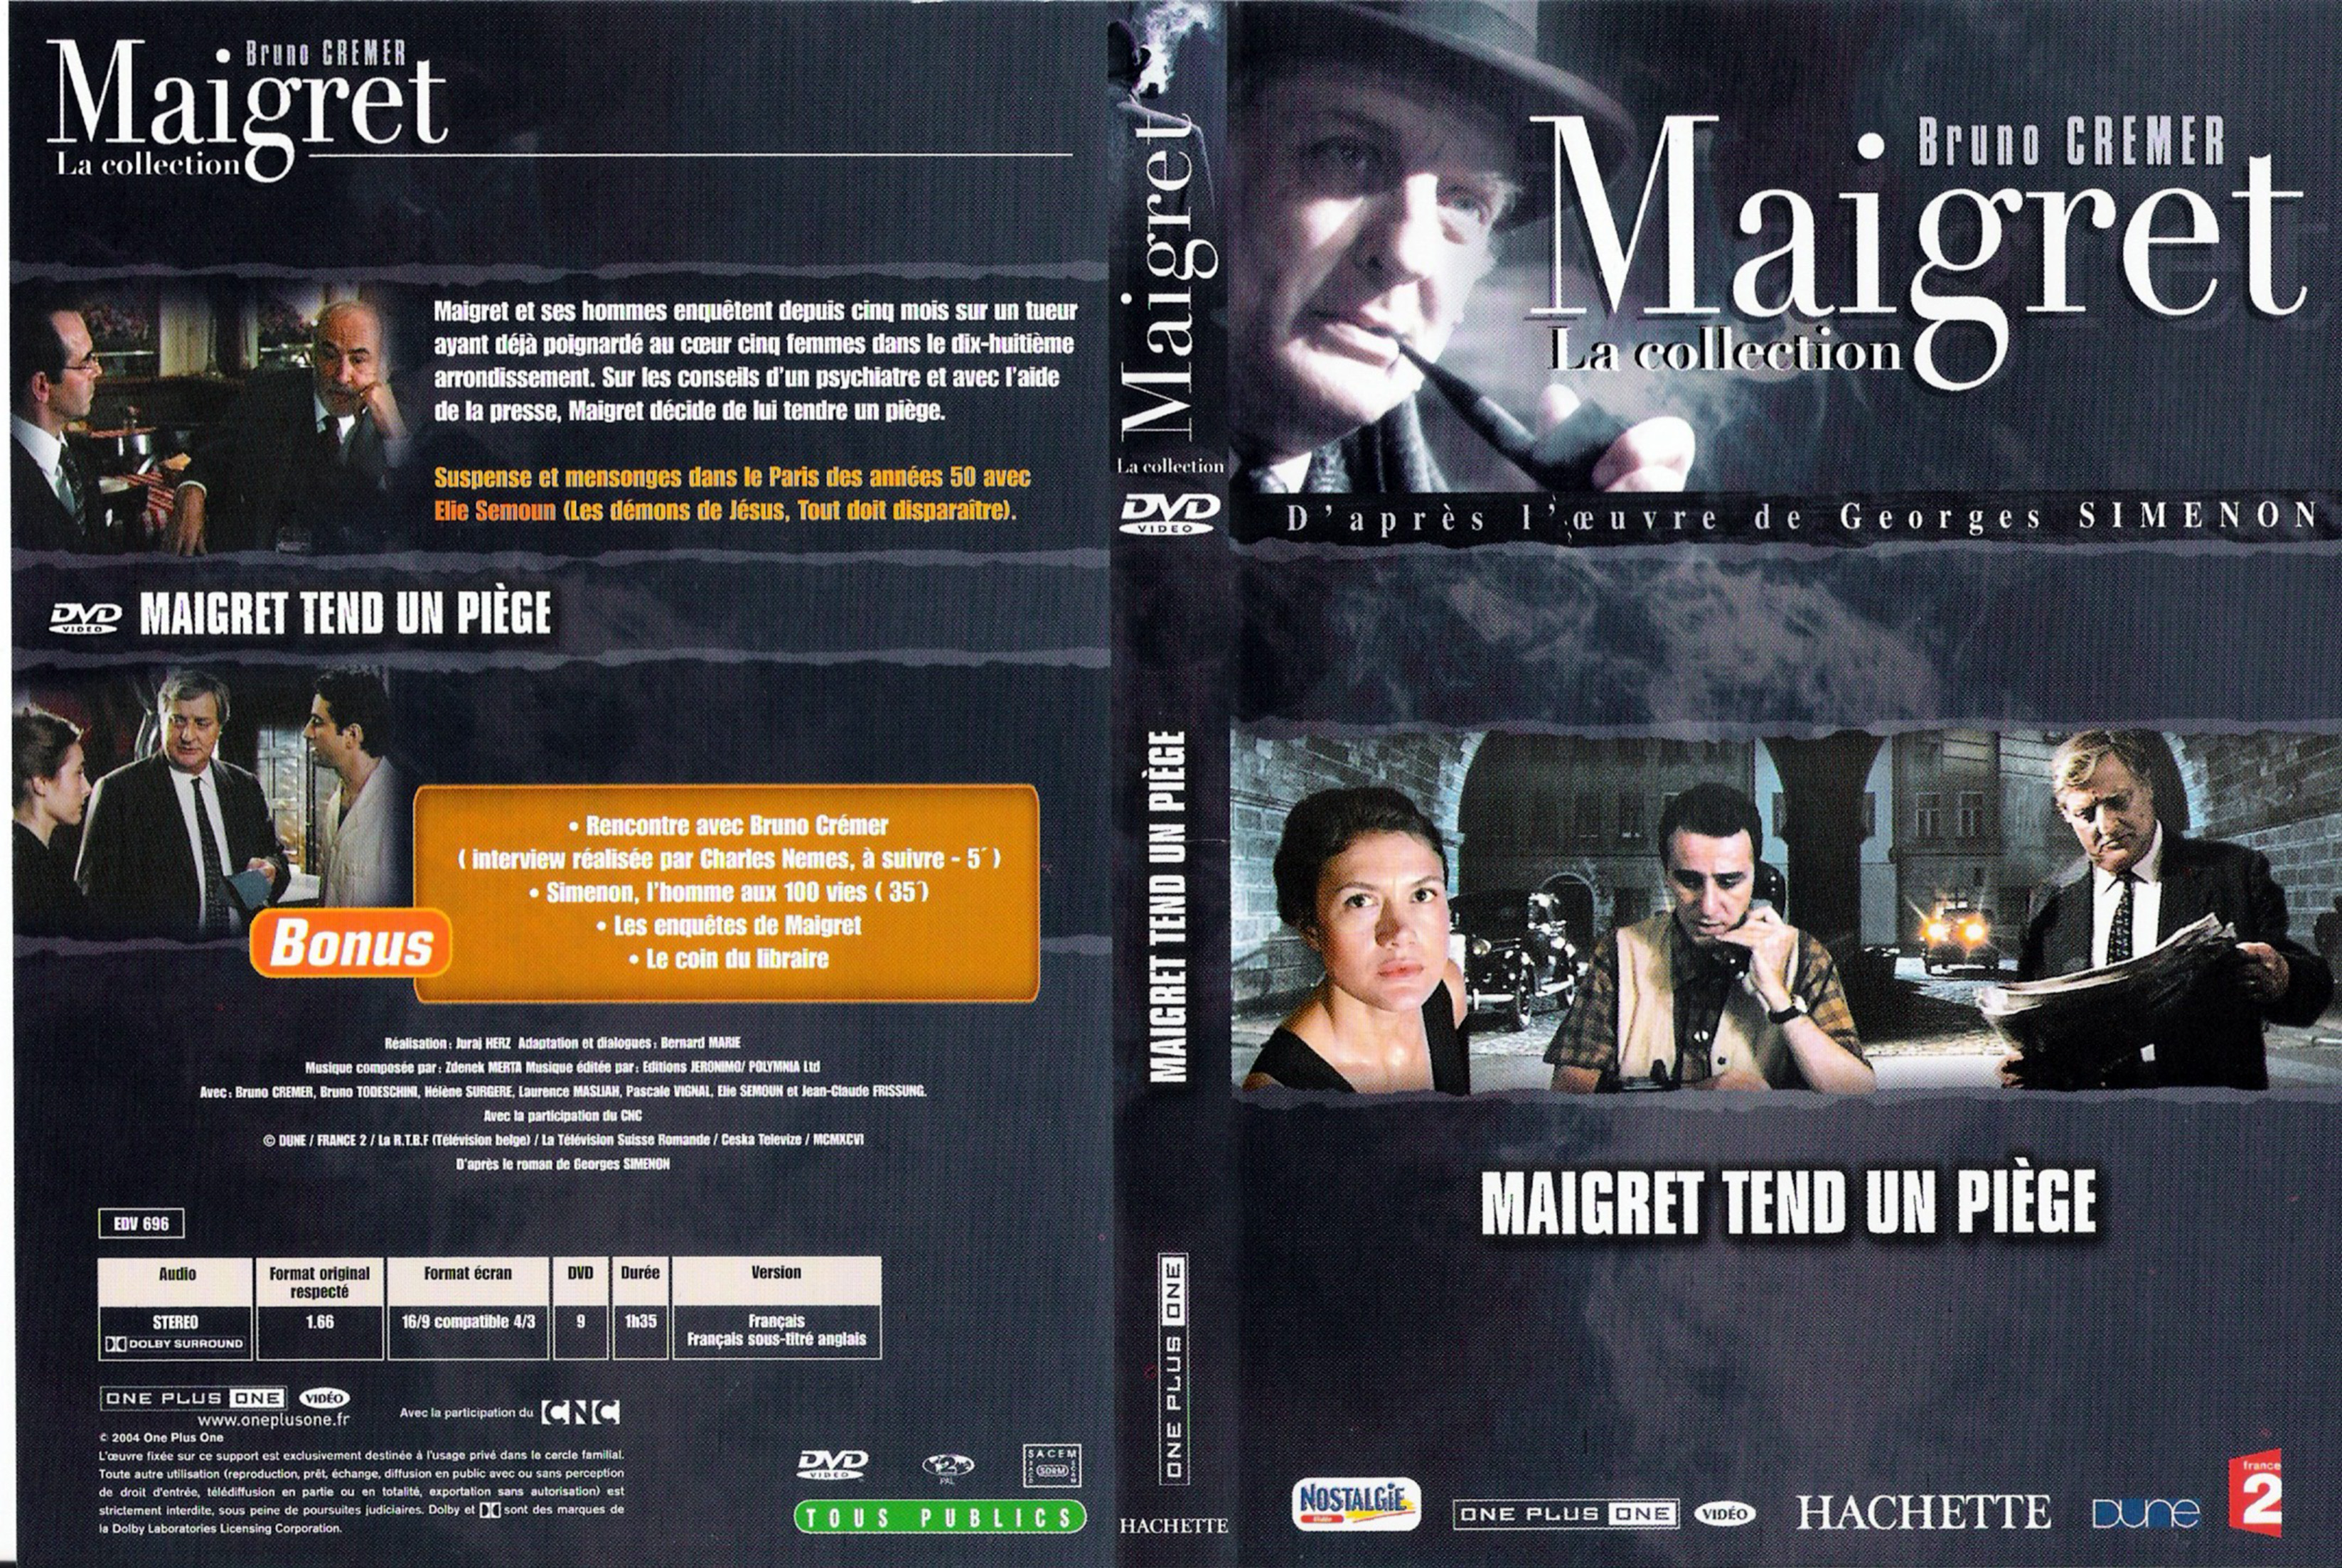 Jaquette DVD Maigret tend un pige (Bruno Cremer)